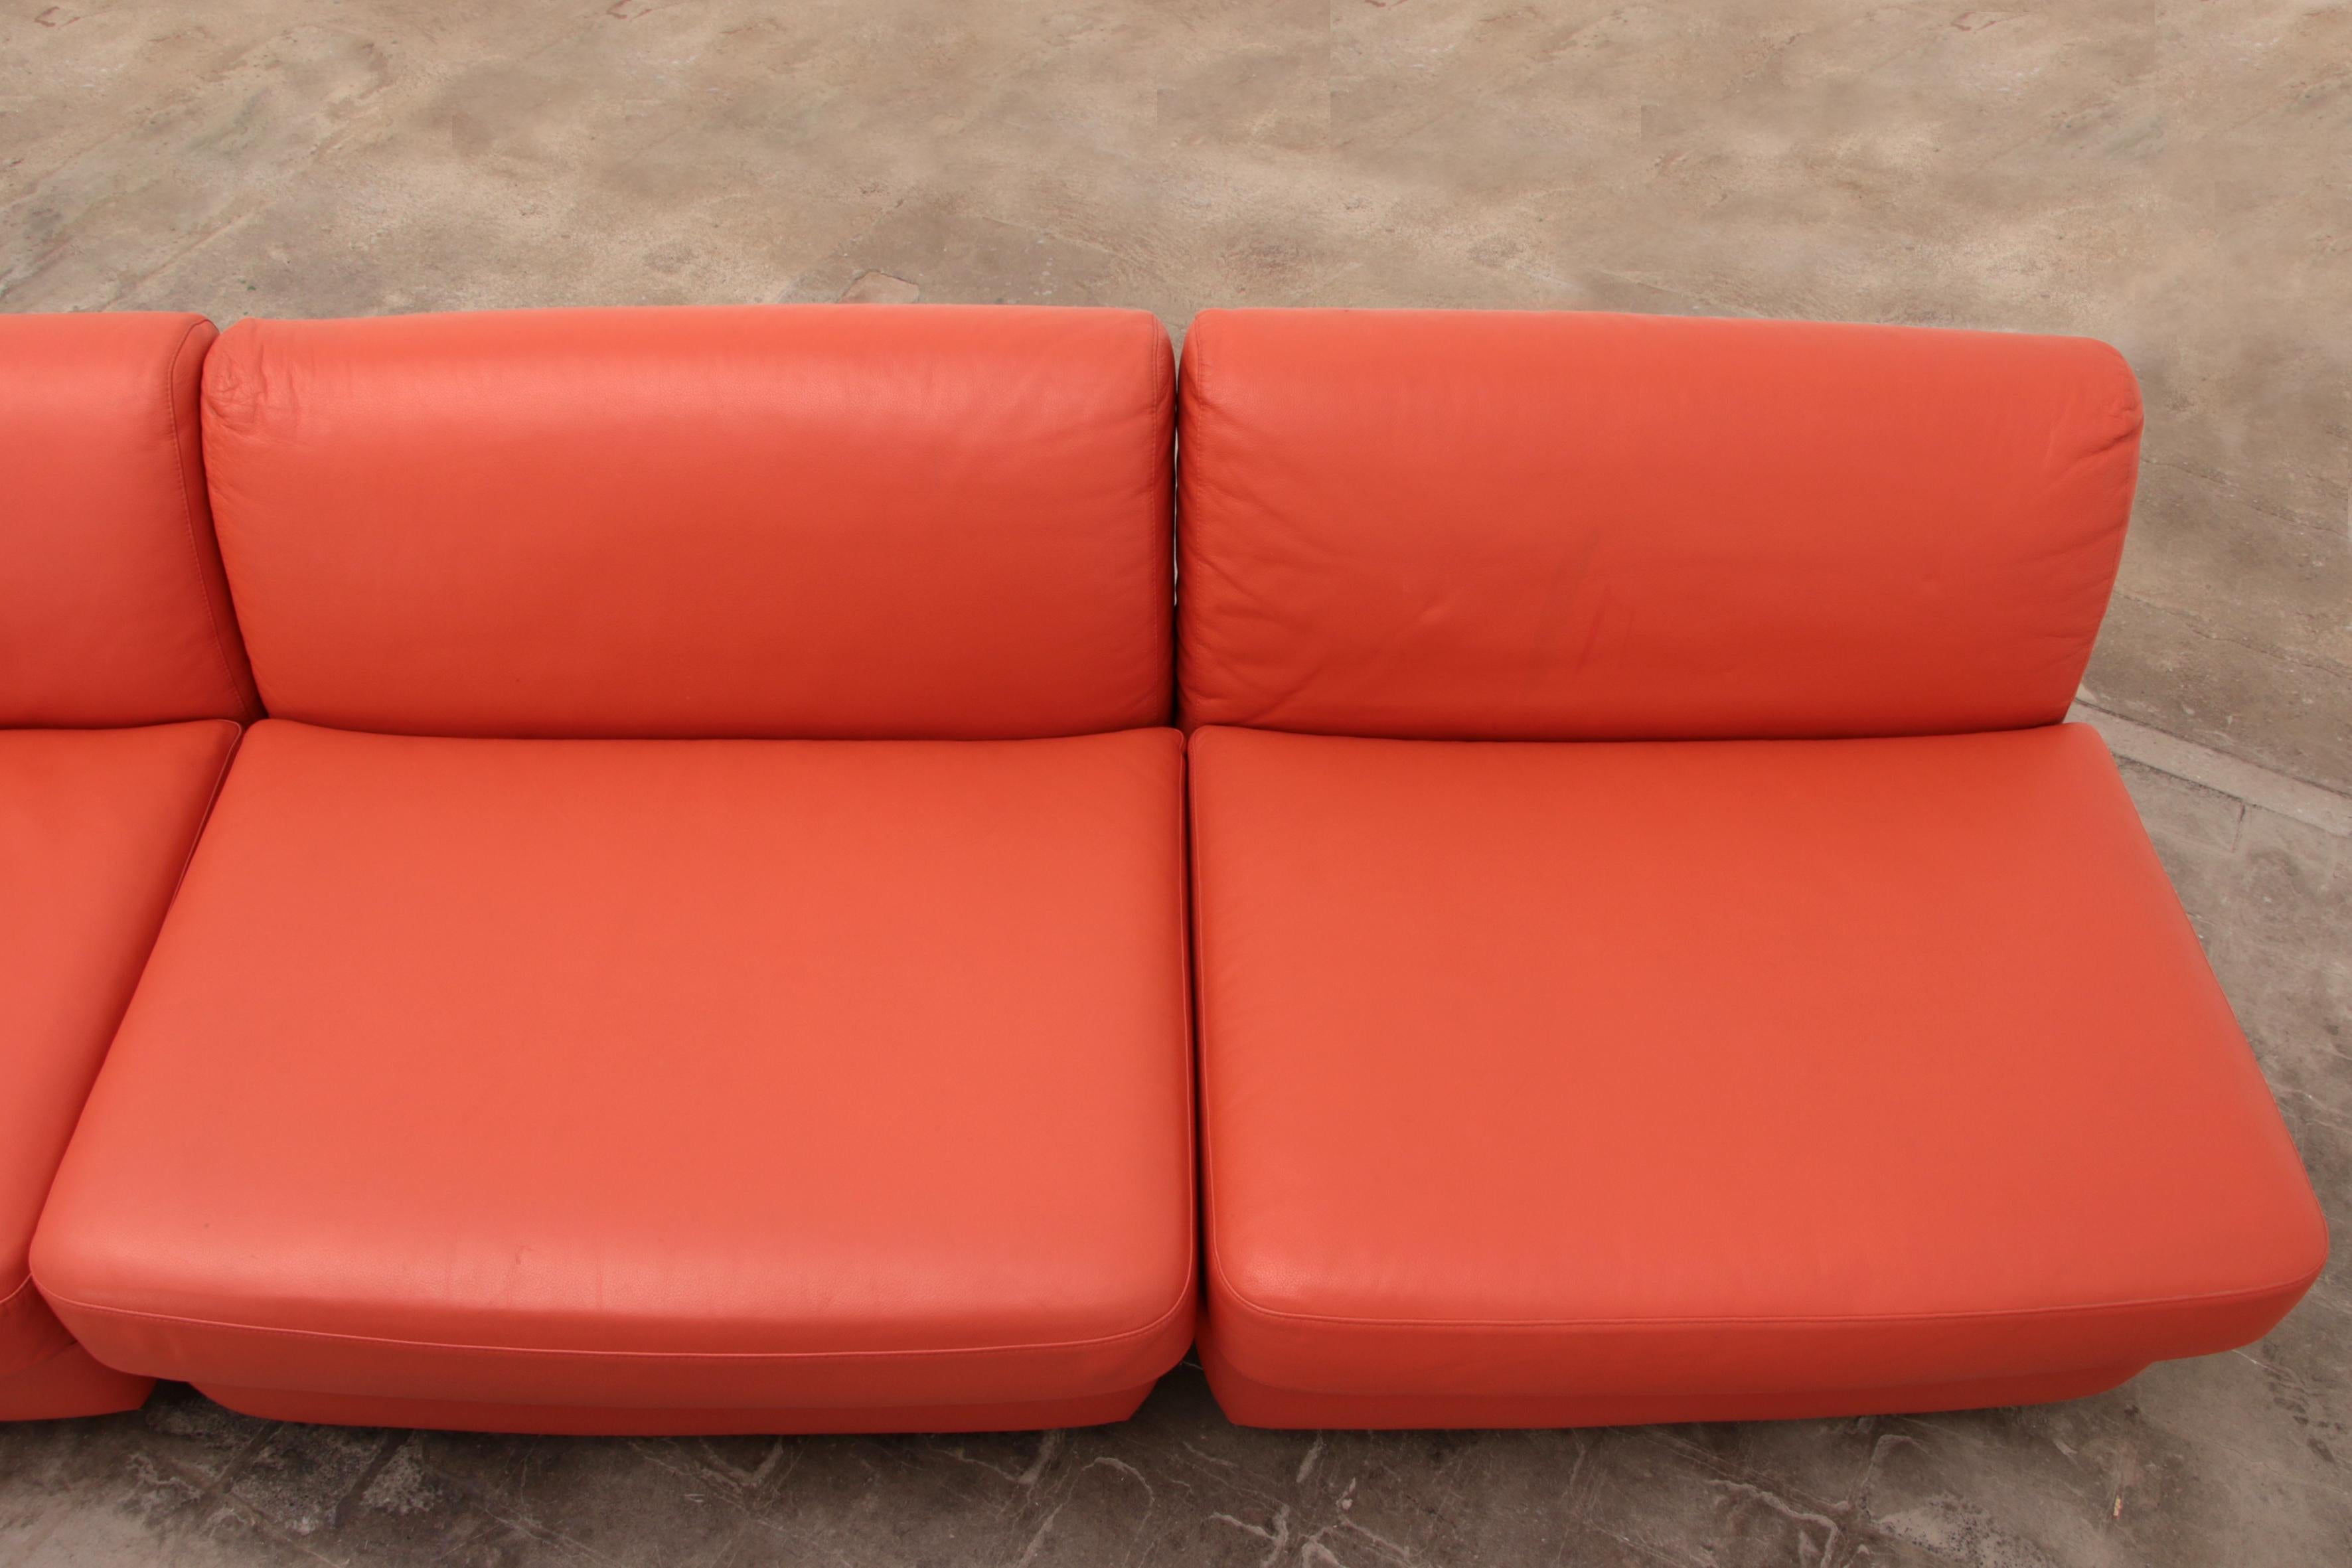 Mid-20th Century Mario Bellini Amanta Modular Sofa in Orange Leather for C&B Italy, 1960s For Sale